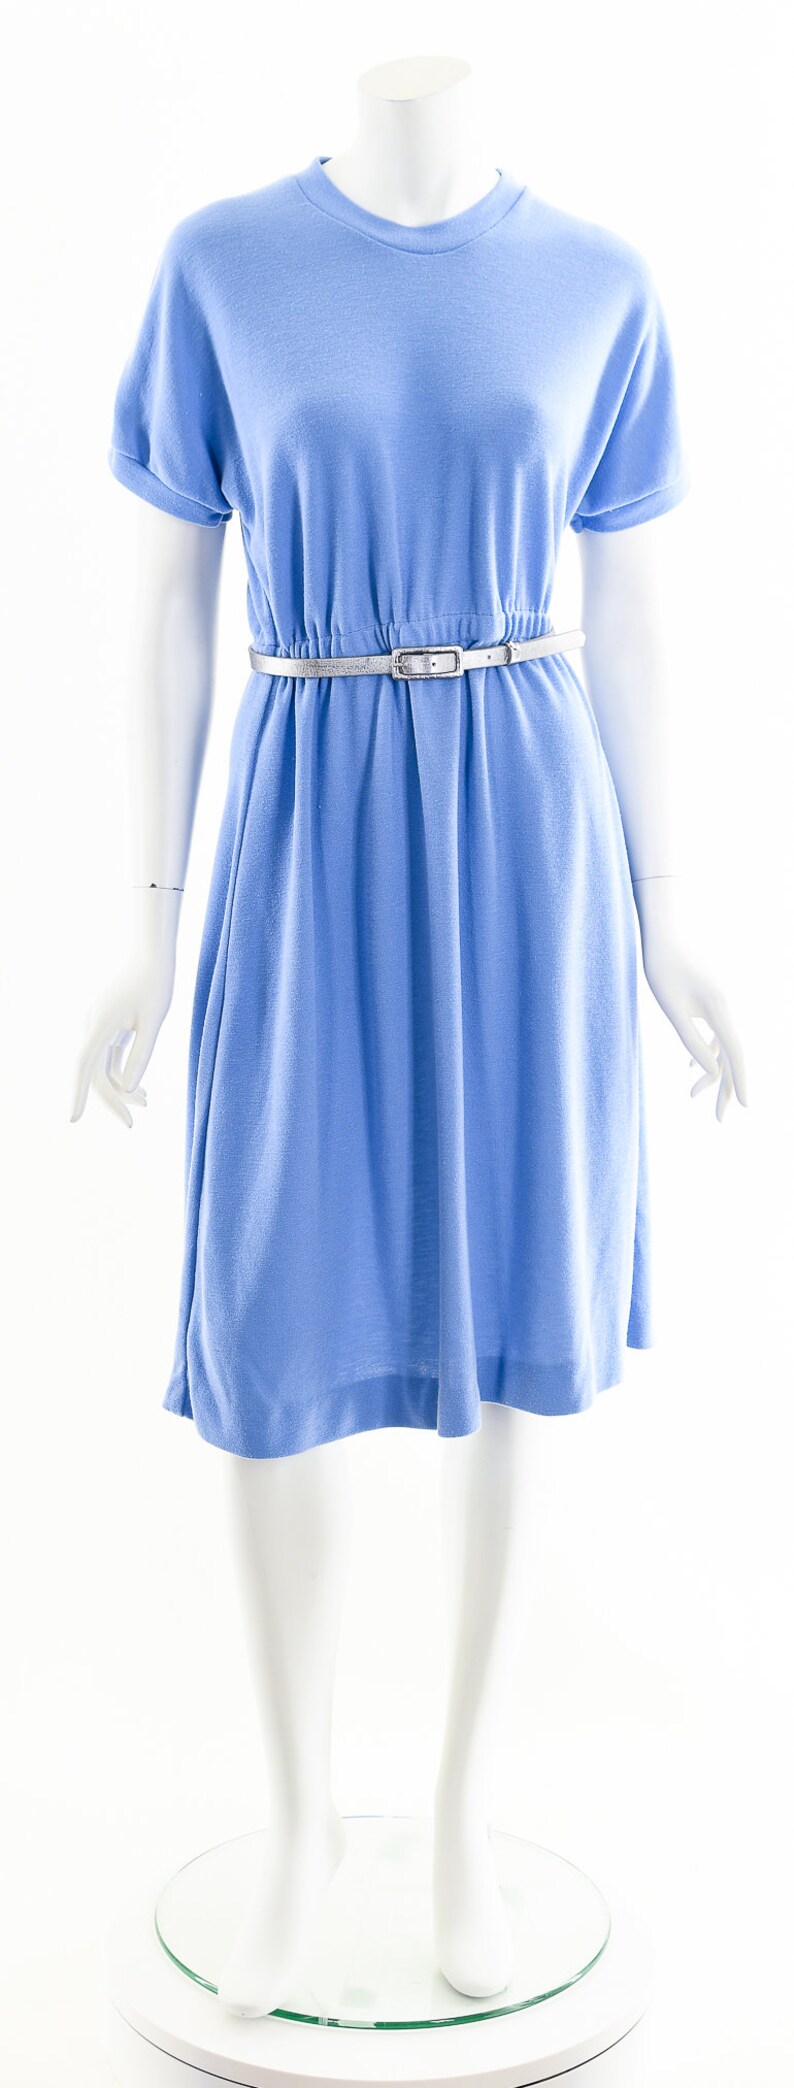 blue knit tshirt dress,80s knit fit and flare dress,mock neck dress, image 4